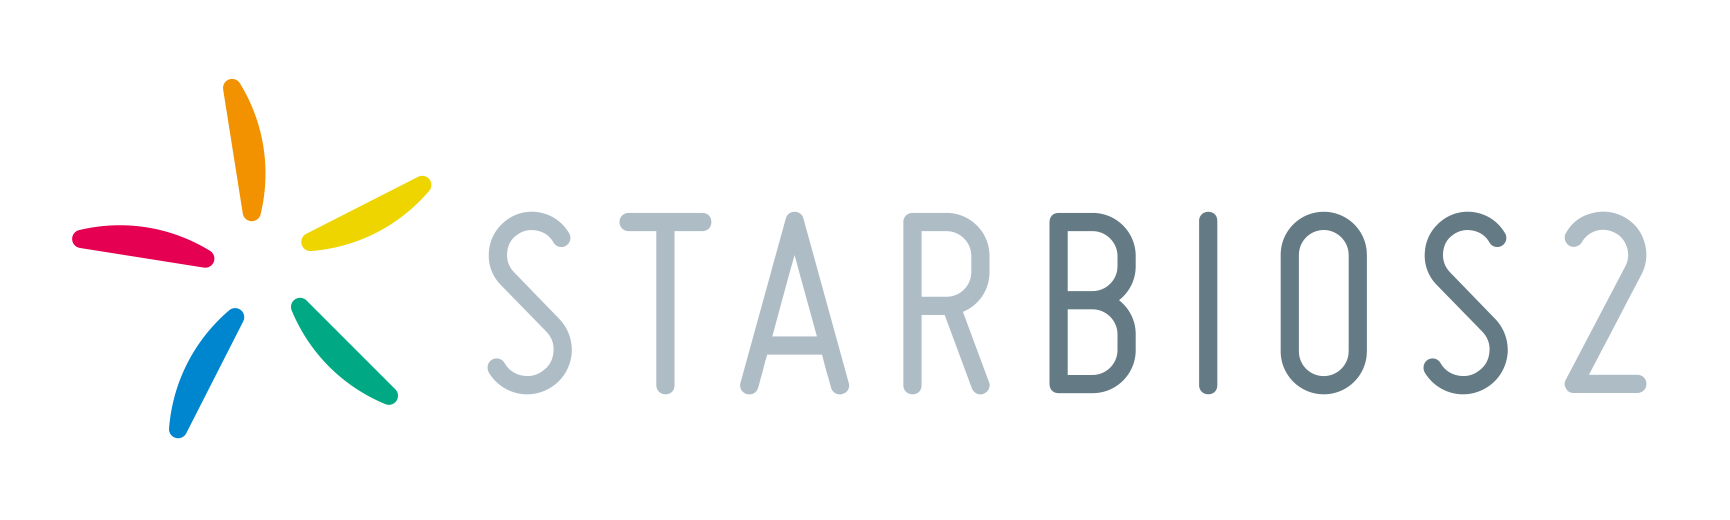 STARBIOS2